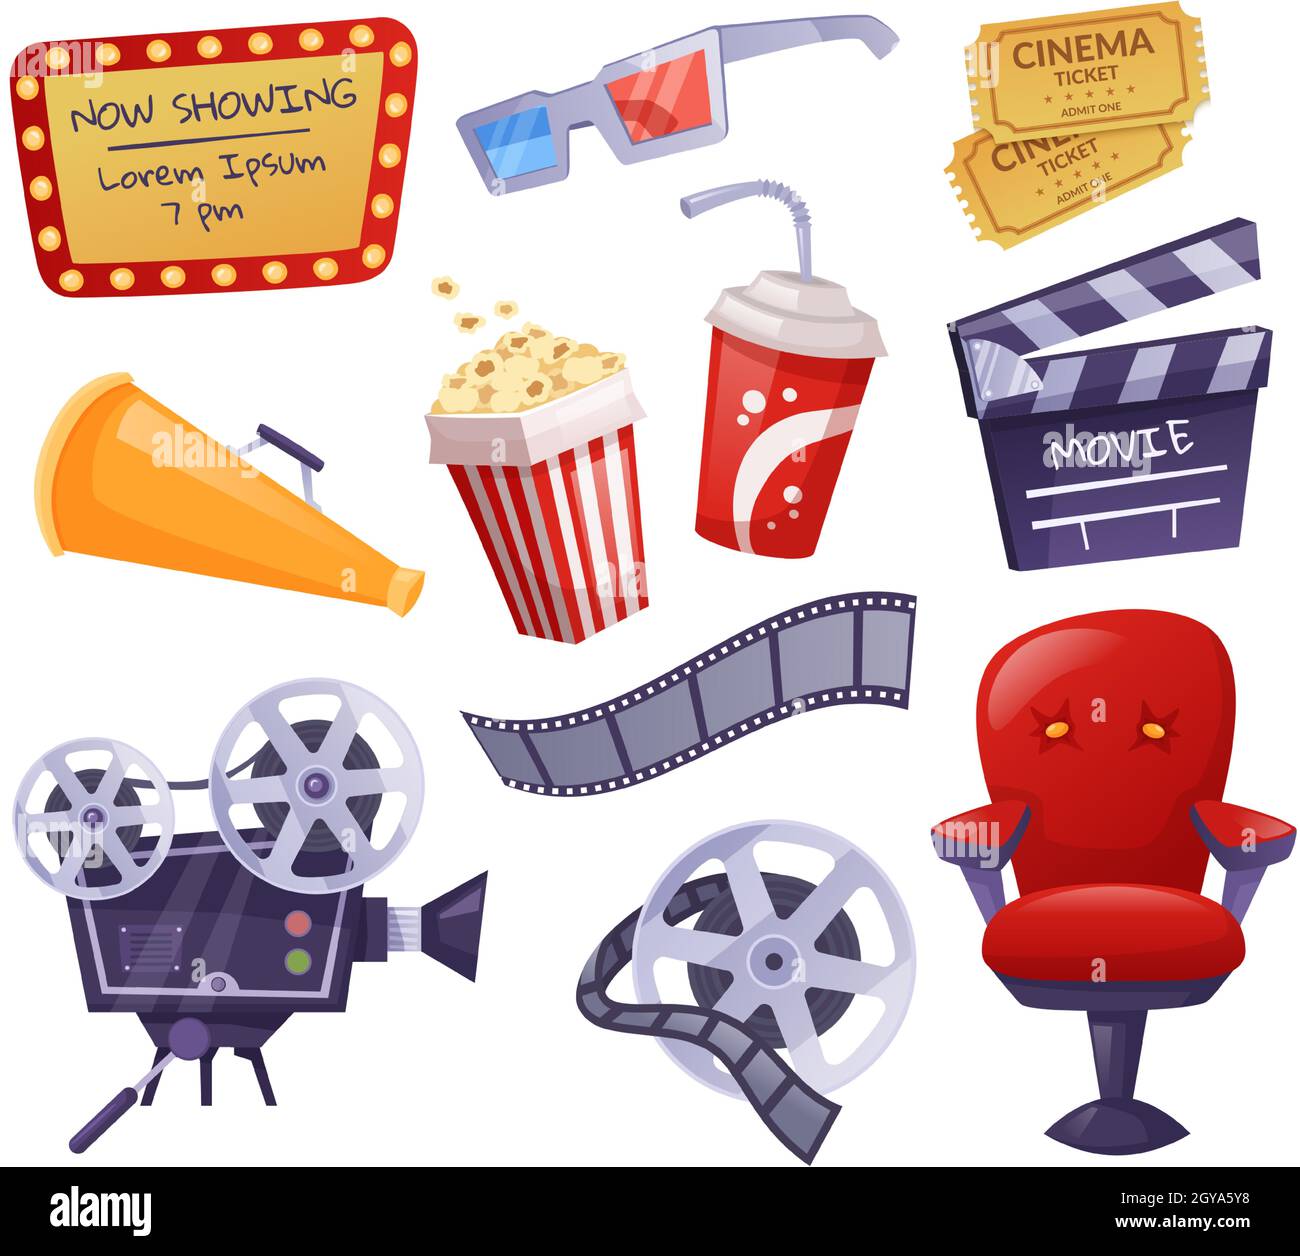 Cartoon-Kino-Elemente, Kinokarten, Popcorn. Kamera, Klappbrett, 3d-Brille, Filmband, Drehtechnik-Vektor-Set für Industriegeräte. Filmproduktion, Unterhaltung Stock Vektor